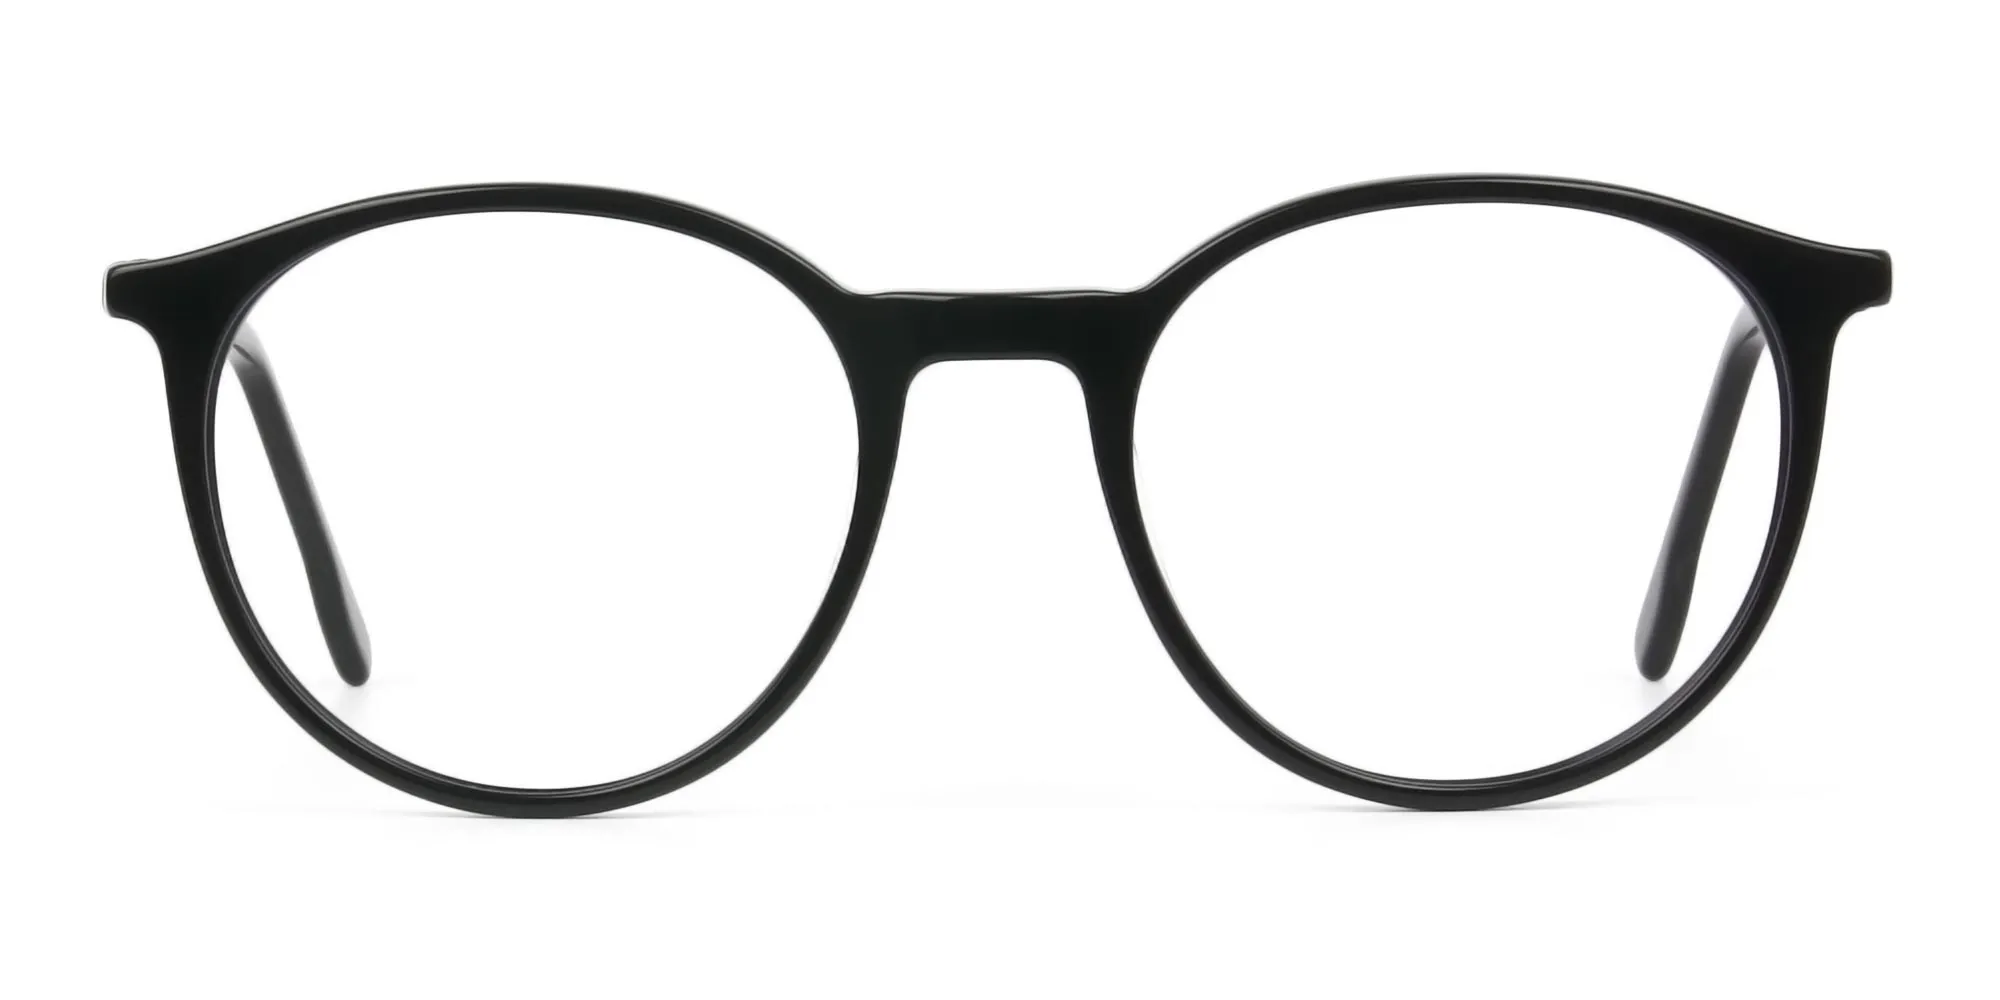 Designer Black Acetate Eyeglasses in Round Men Women - 2